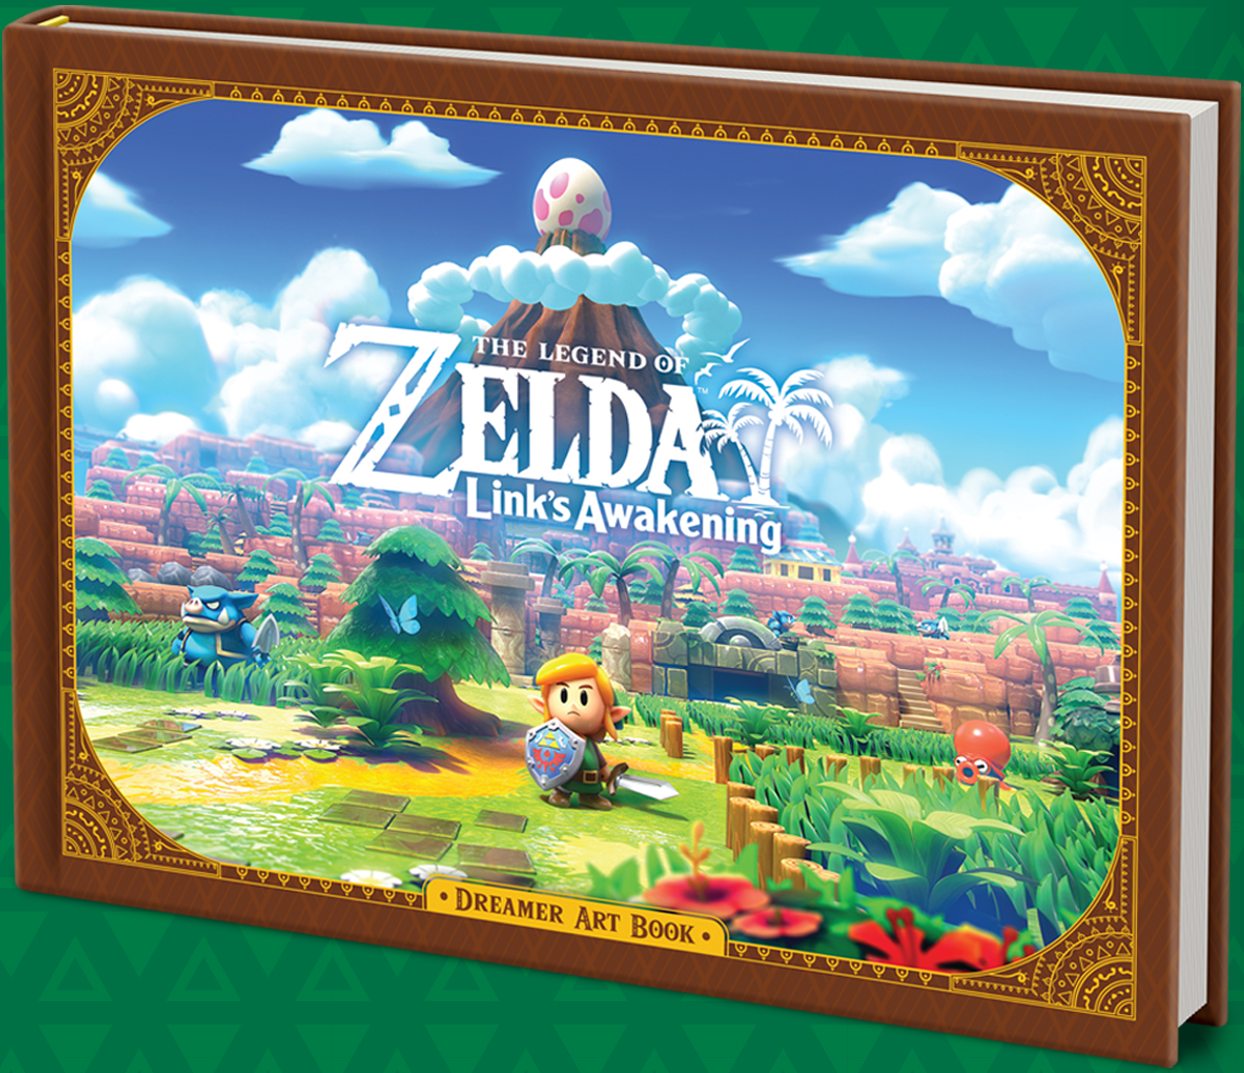 The Legend of Zelda: Link's Awakening ebook by GamerGuides.com - Rakuten  Kobo